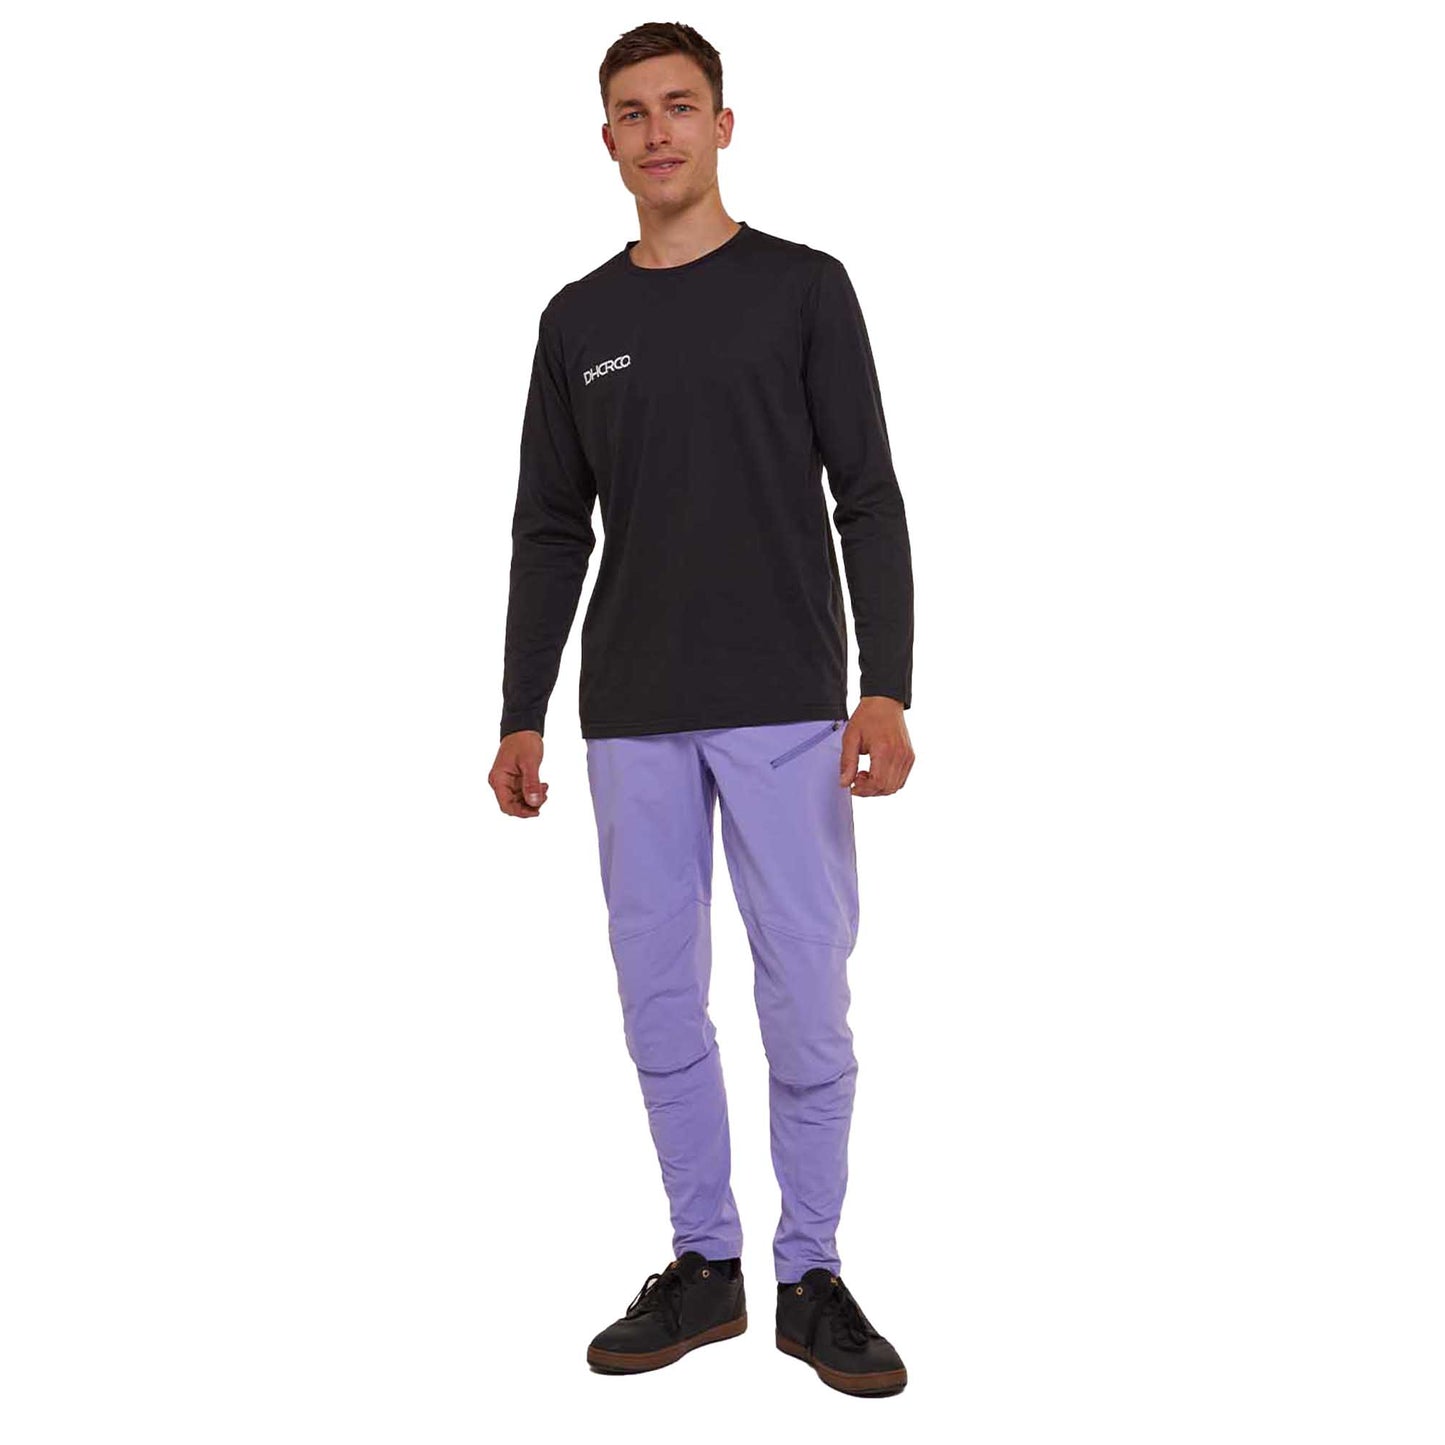 DHaRCO Men's Gravity Pants - S - Purple Haze